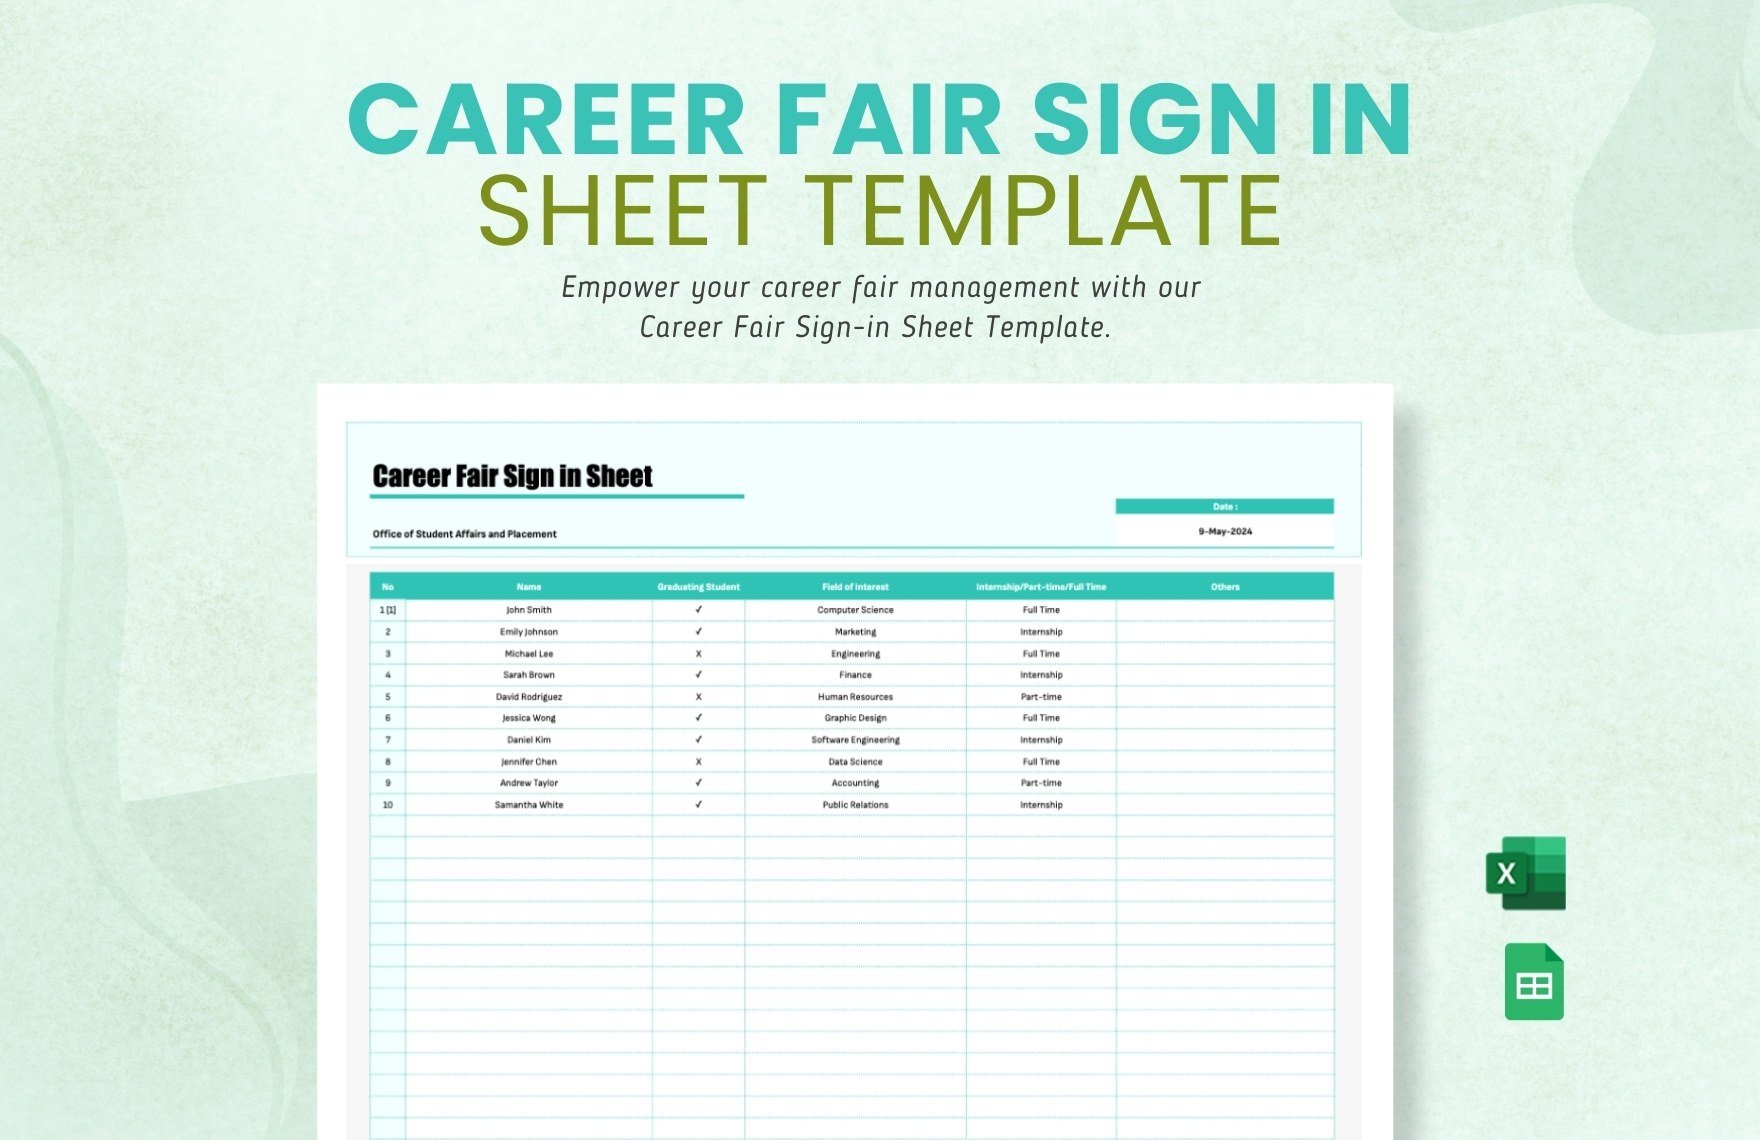 Career Fair Sign in Sheet Template